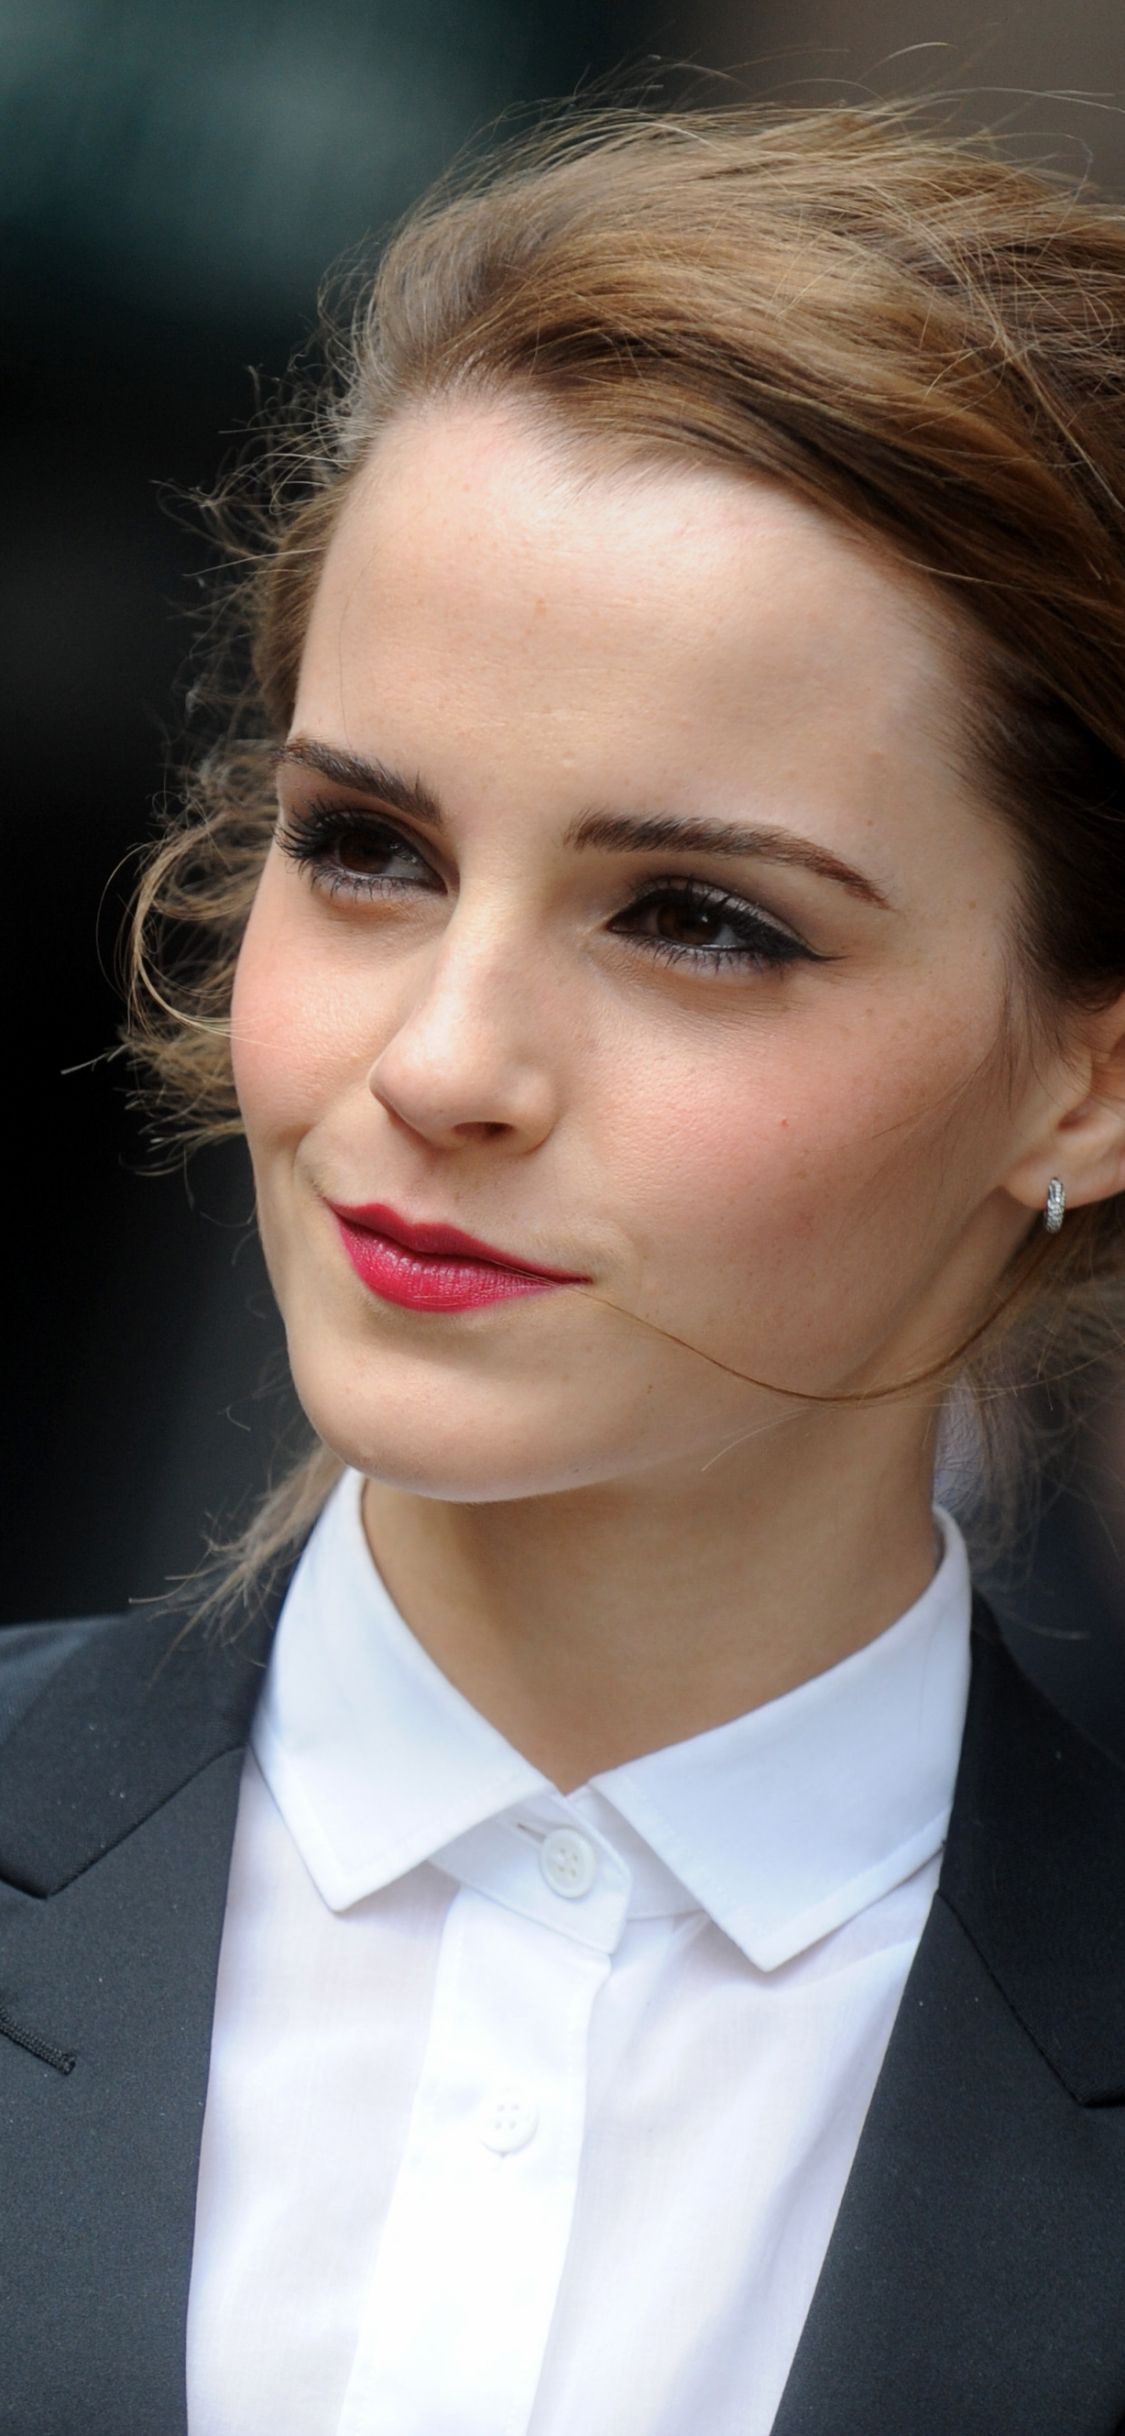 Emma Watson 1080x1920 Resolution Wallpapers Iphone 7,6s,6 Plus, Pixel xl  ,One Plus 3,3t,5